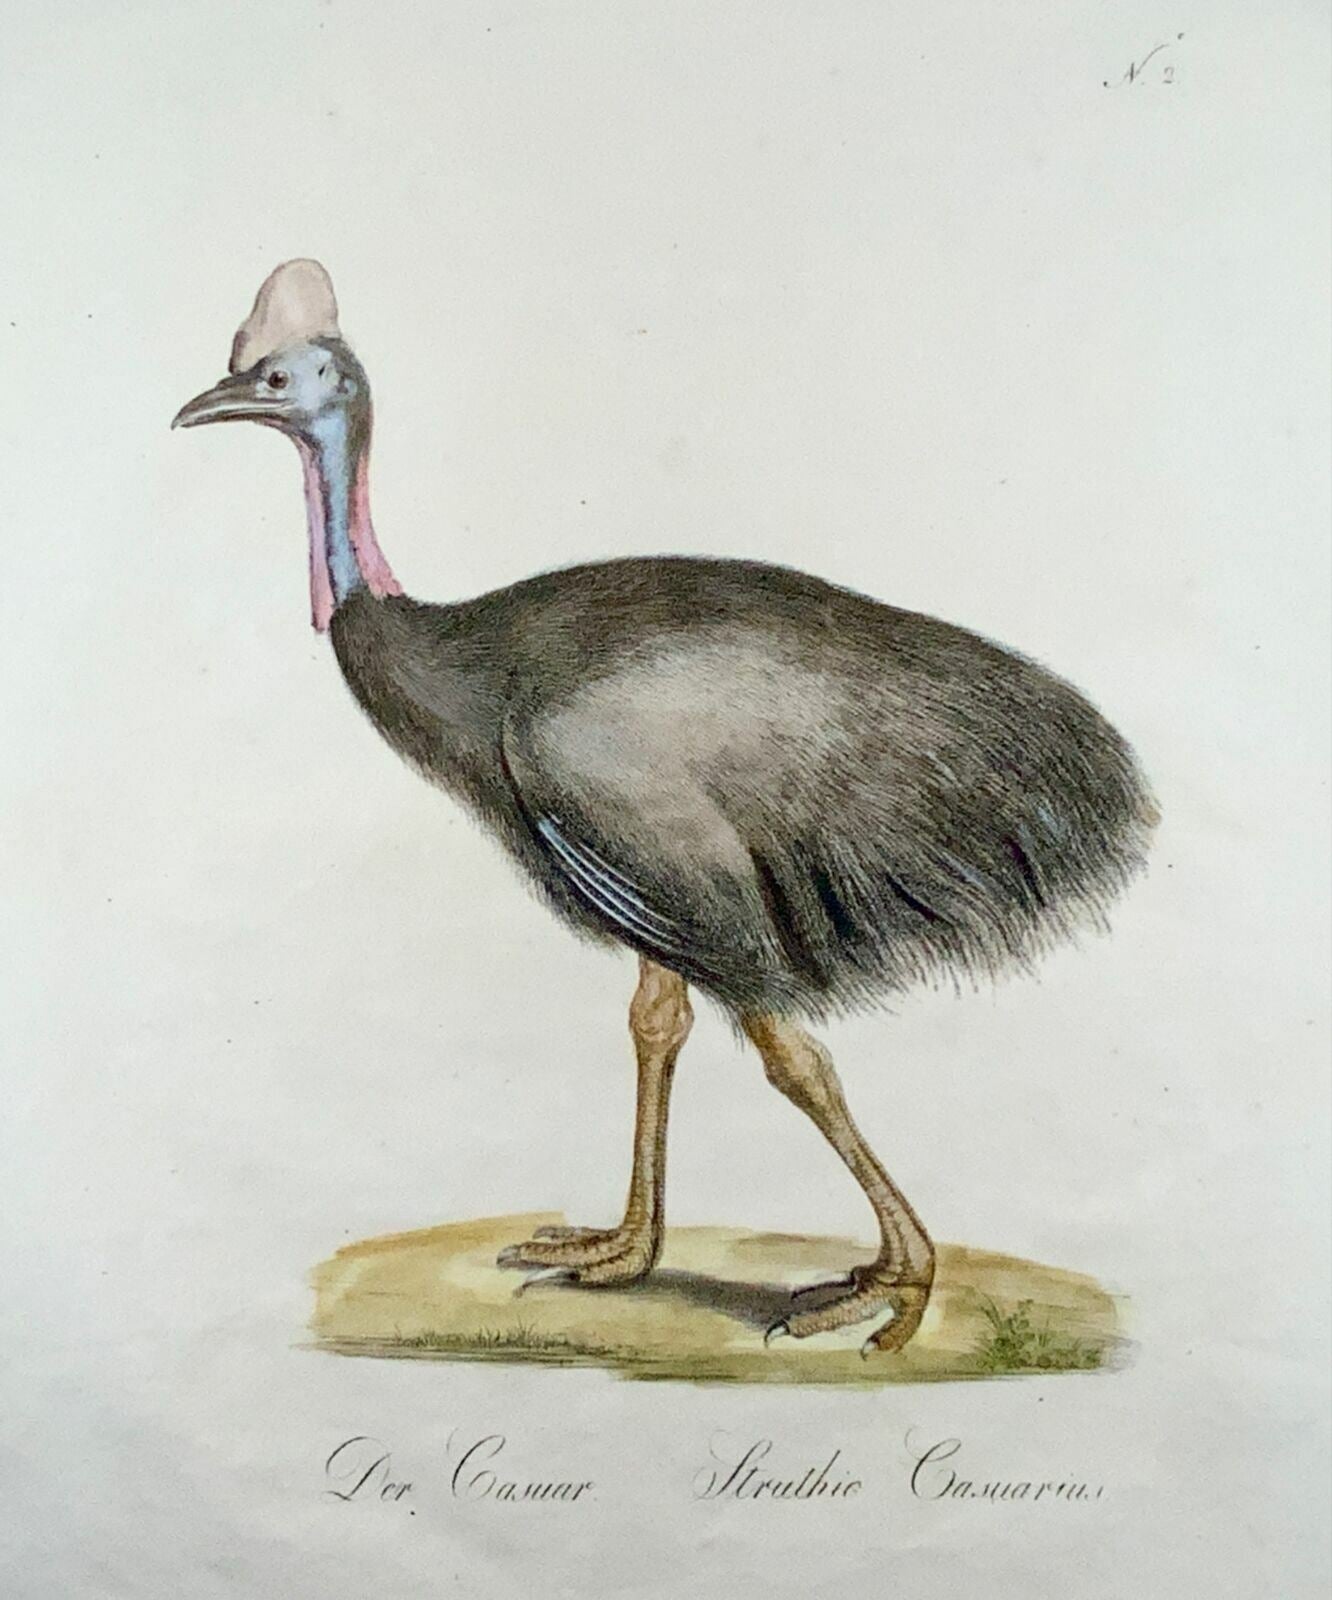 1816 Cassowaries, ornithology, imp. folio 42.5 cm, Brodtmann, master engraving